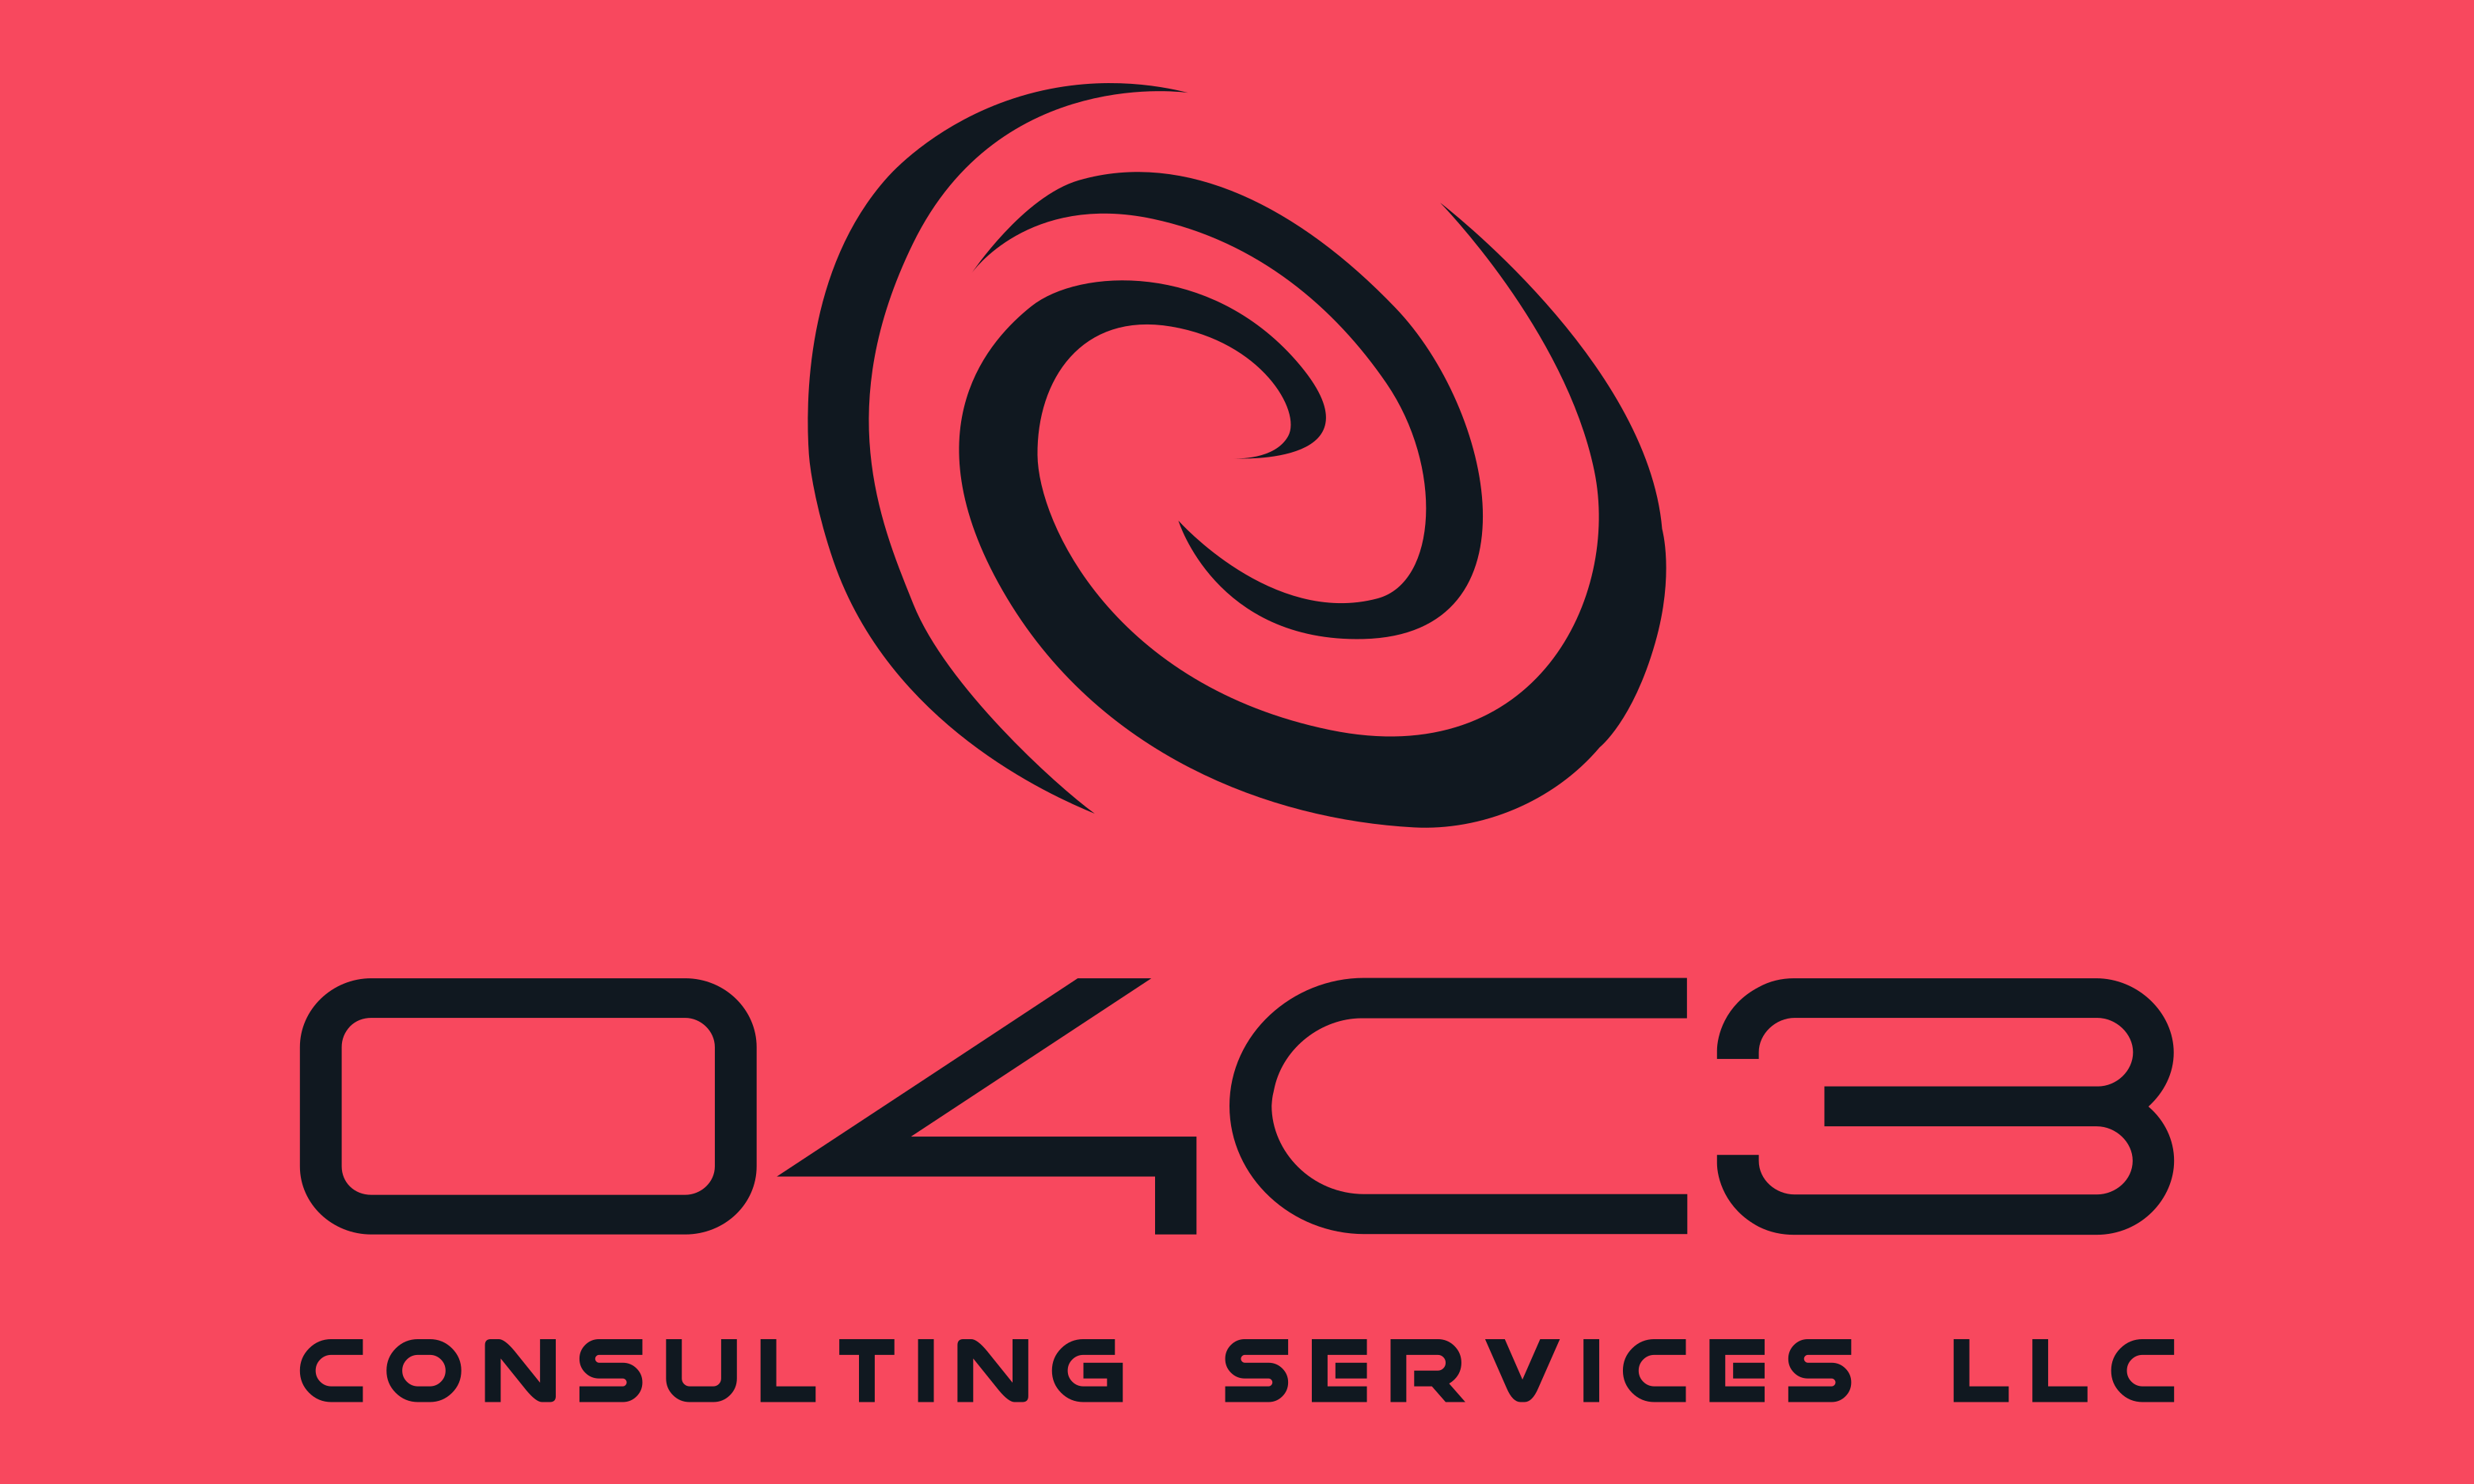 04C3 Consulting Services LLC